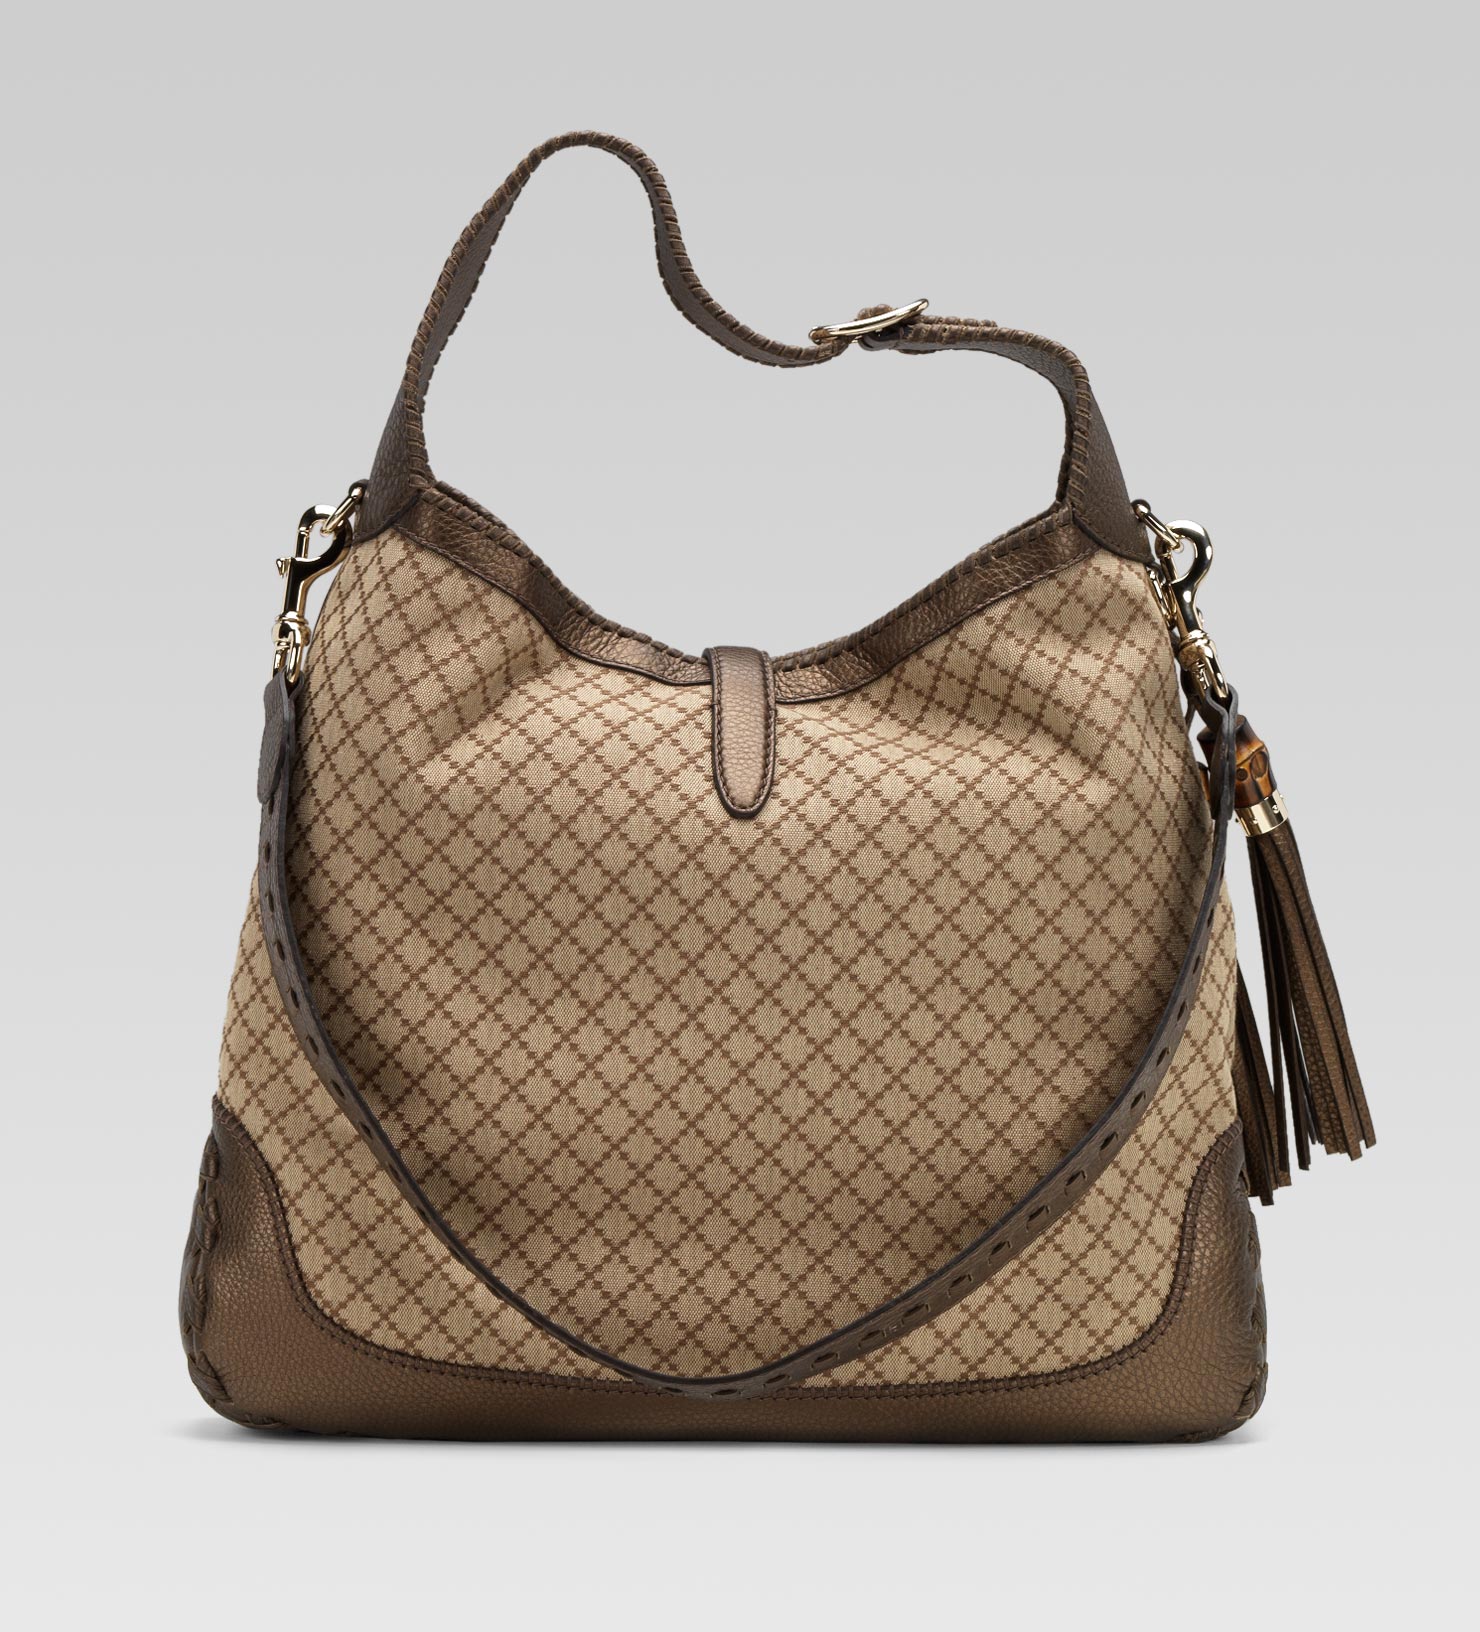 Lyst - Gucci New Jackie Diamante Canvas Shoulder Bag in Brown